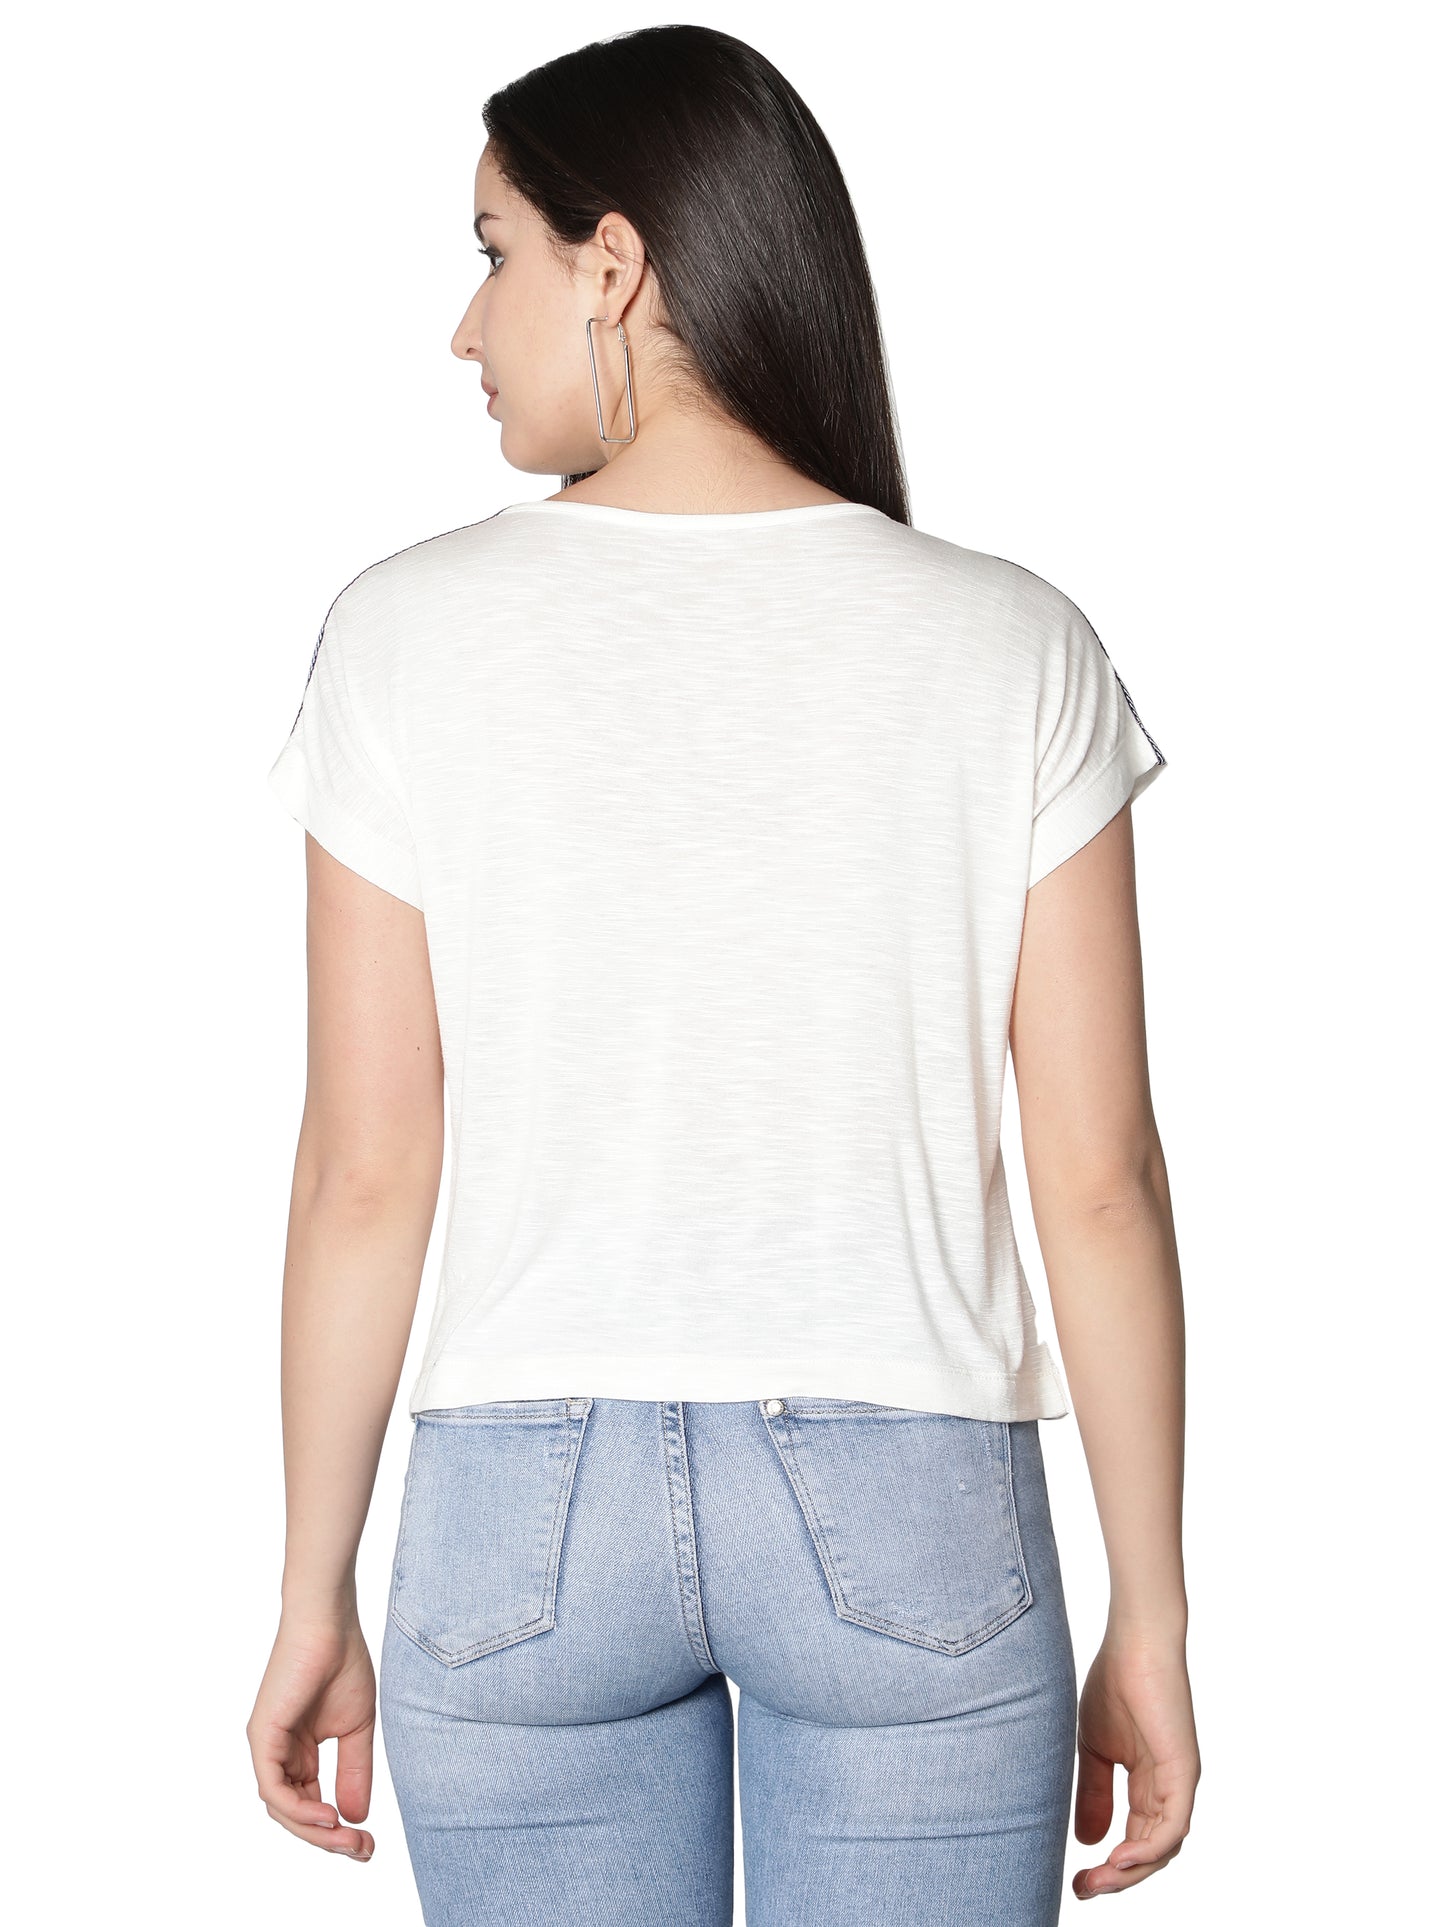 NUEVOSDAMAS Women Rayon Printed White T-Shirt/Top